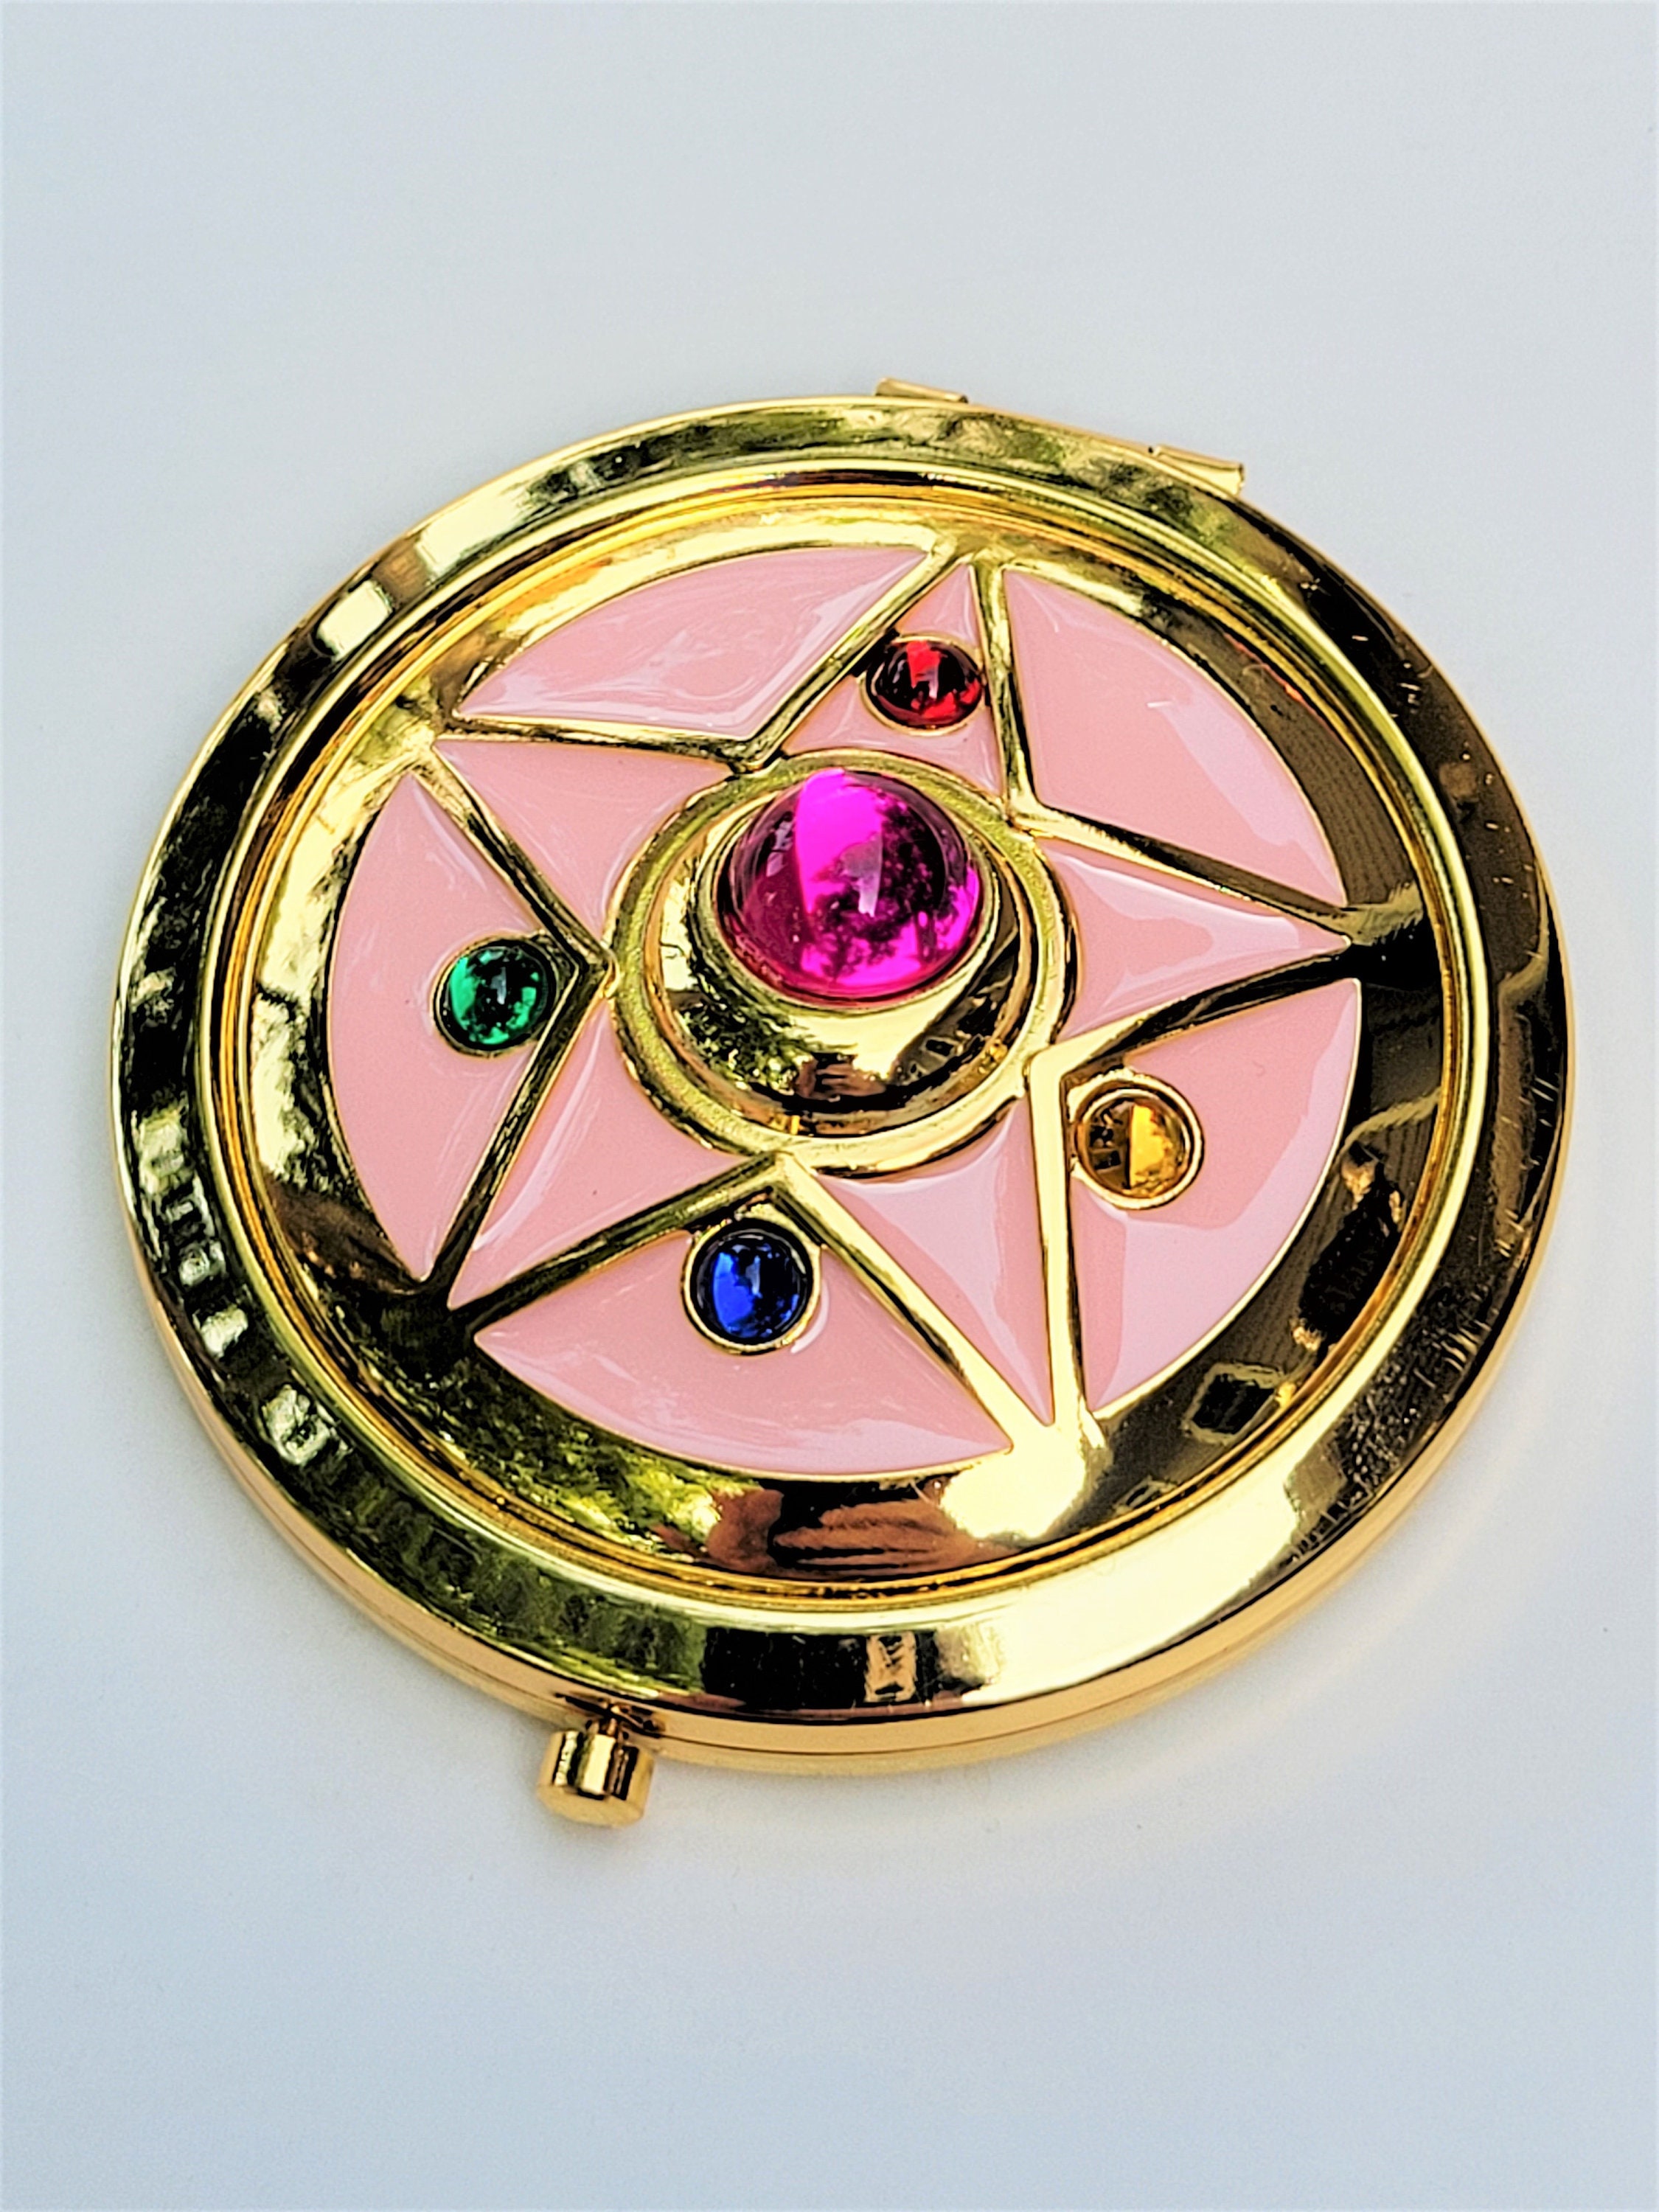 Flawed Sailor Moon Crystal Star Compact Brooch Locket Fully 